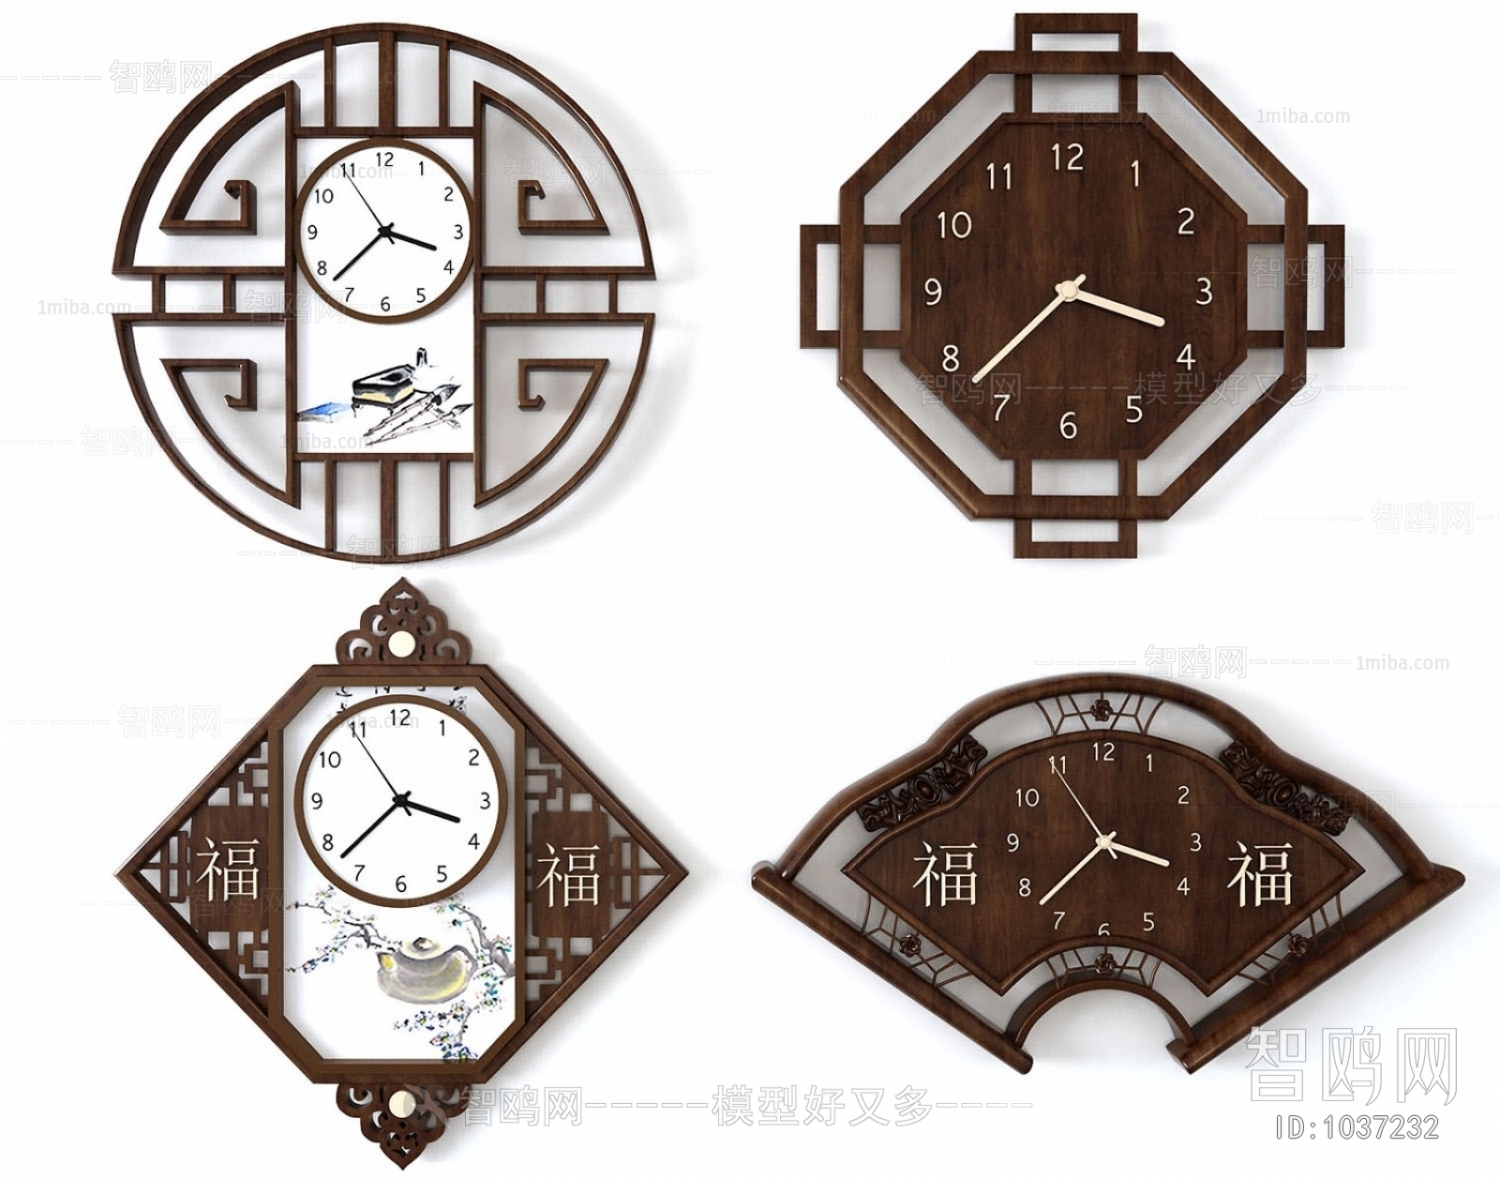 Chinese Style Wall Clock